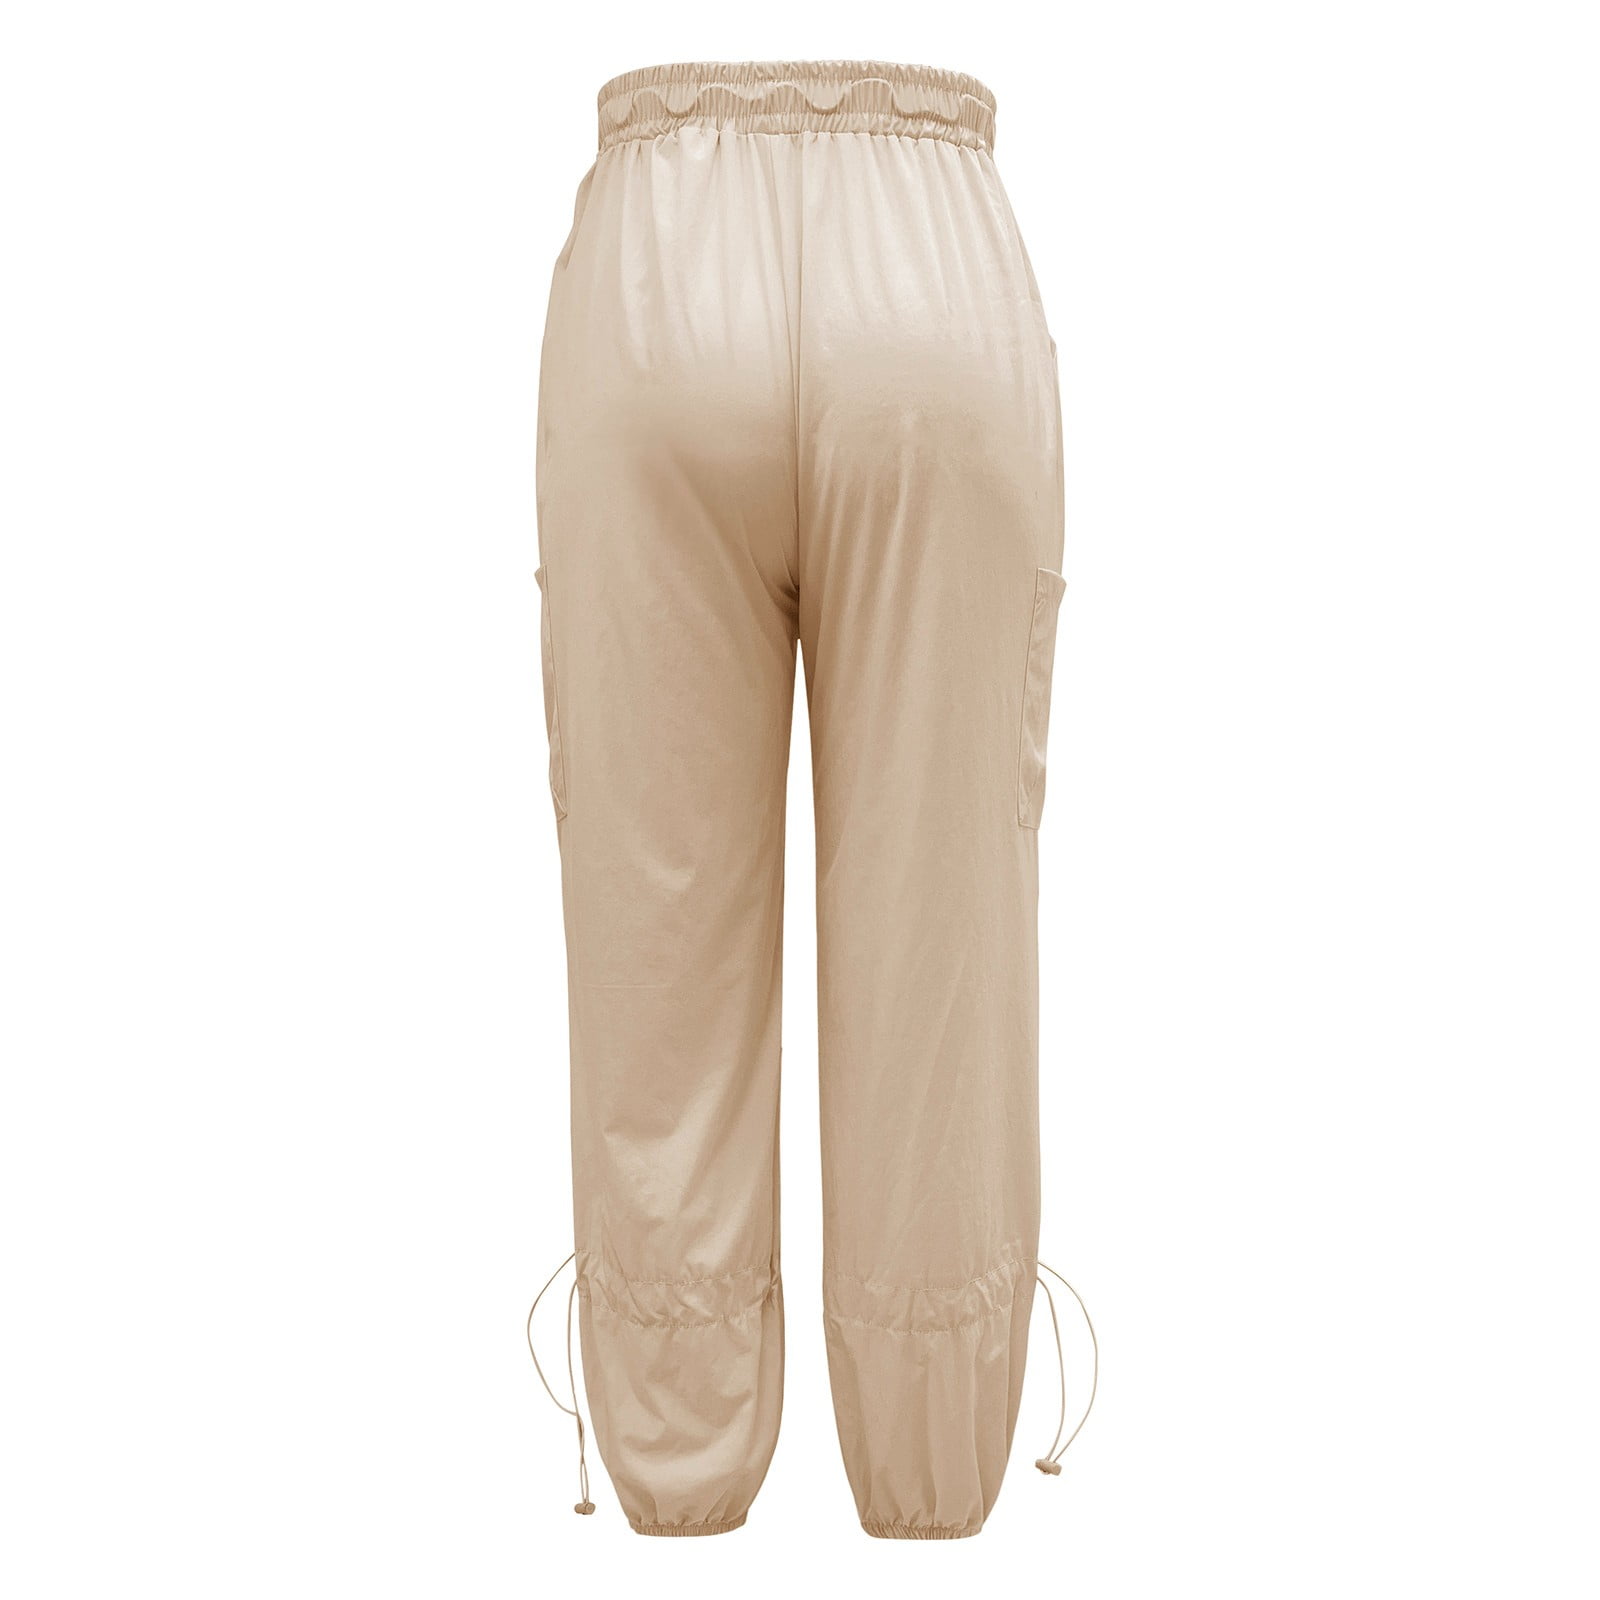 Buy Kvish Women's Comfortable Breathable Straight Fit Ankle Length Front  Side Pocket Lycra Pants (Beige-S) at